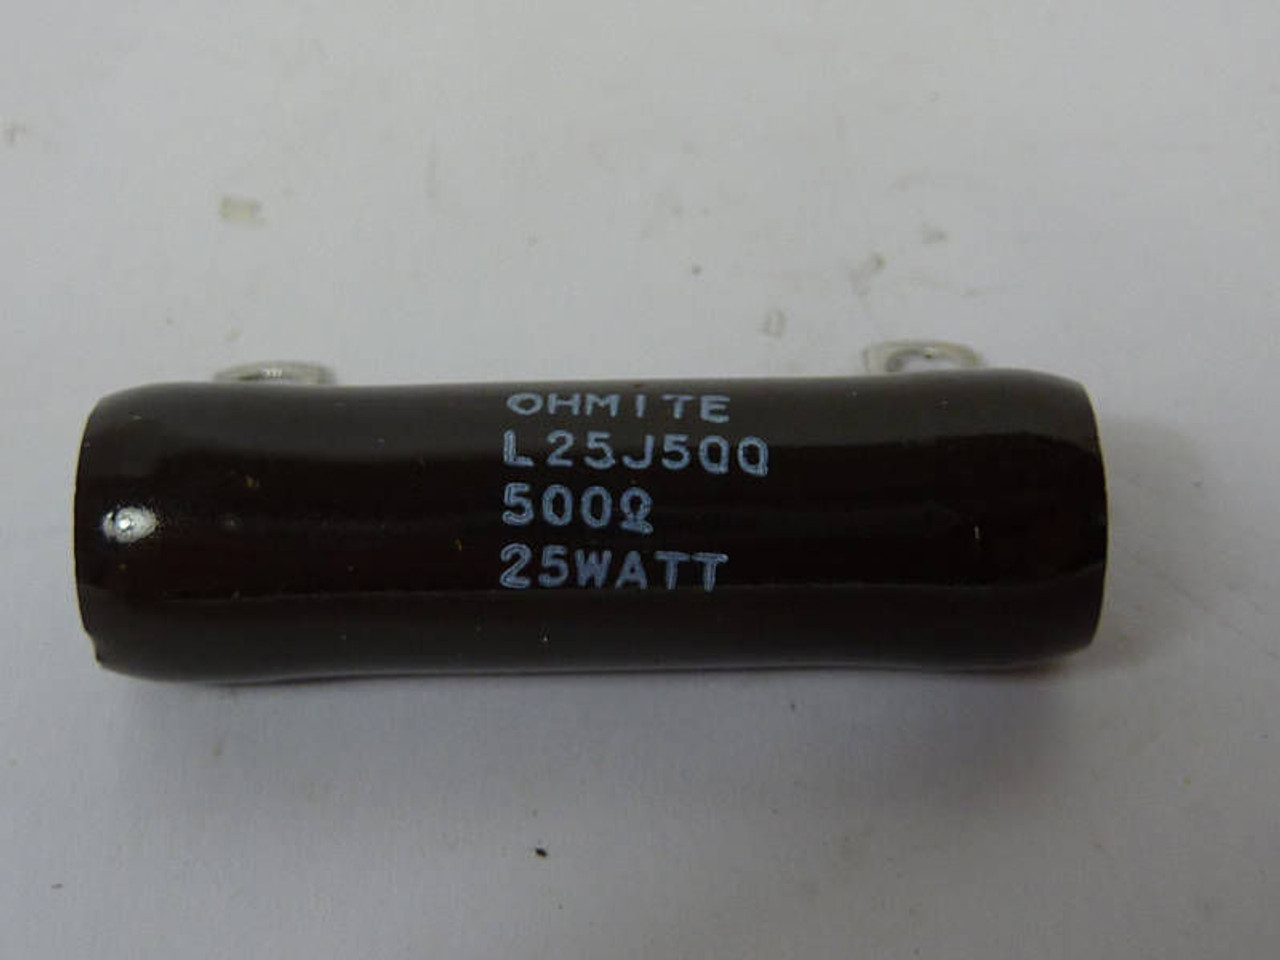 Ohmite Resistor 25W 500Ohms L25J500 ! NEW !